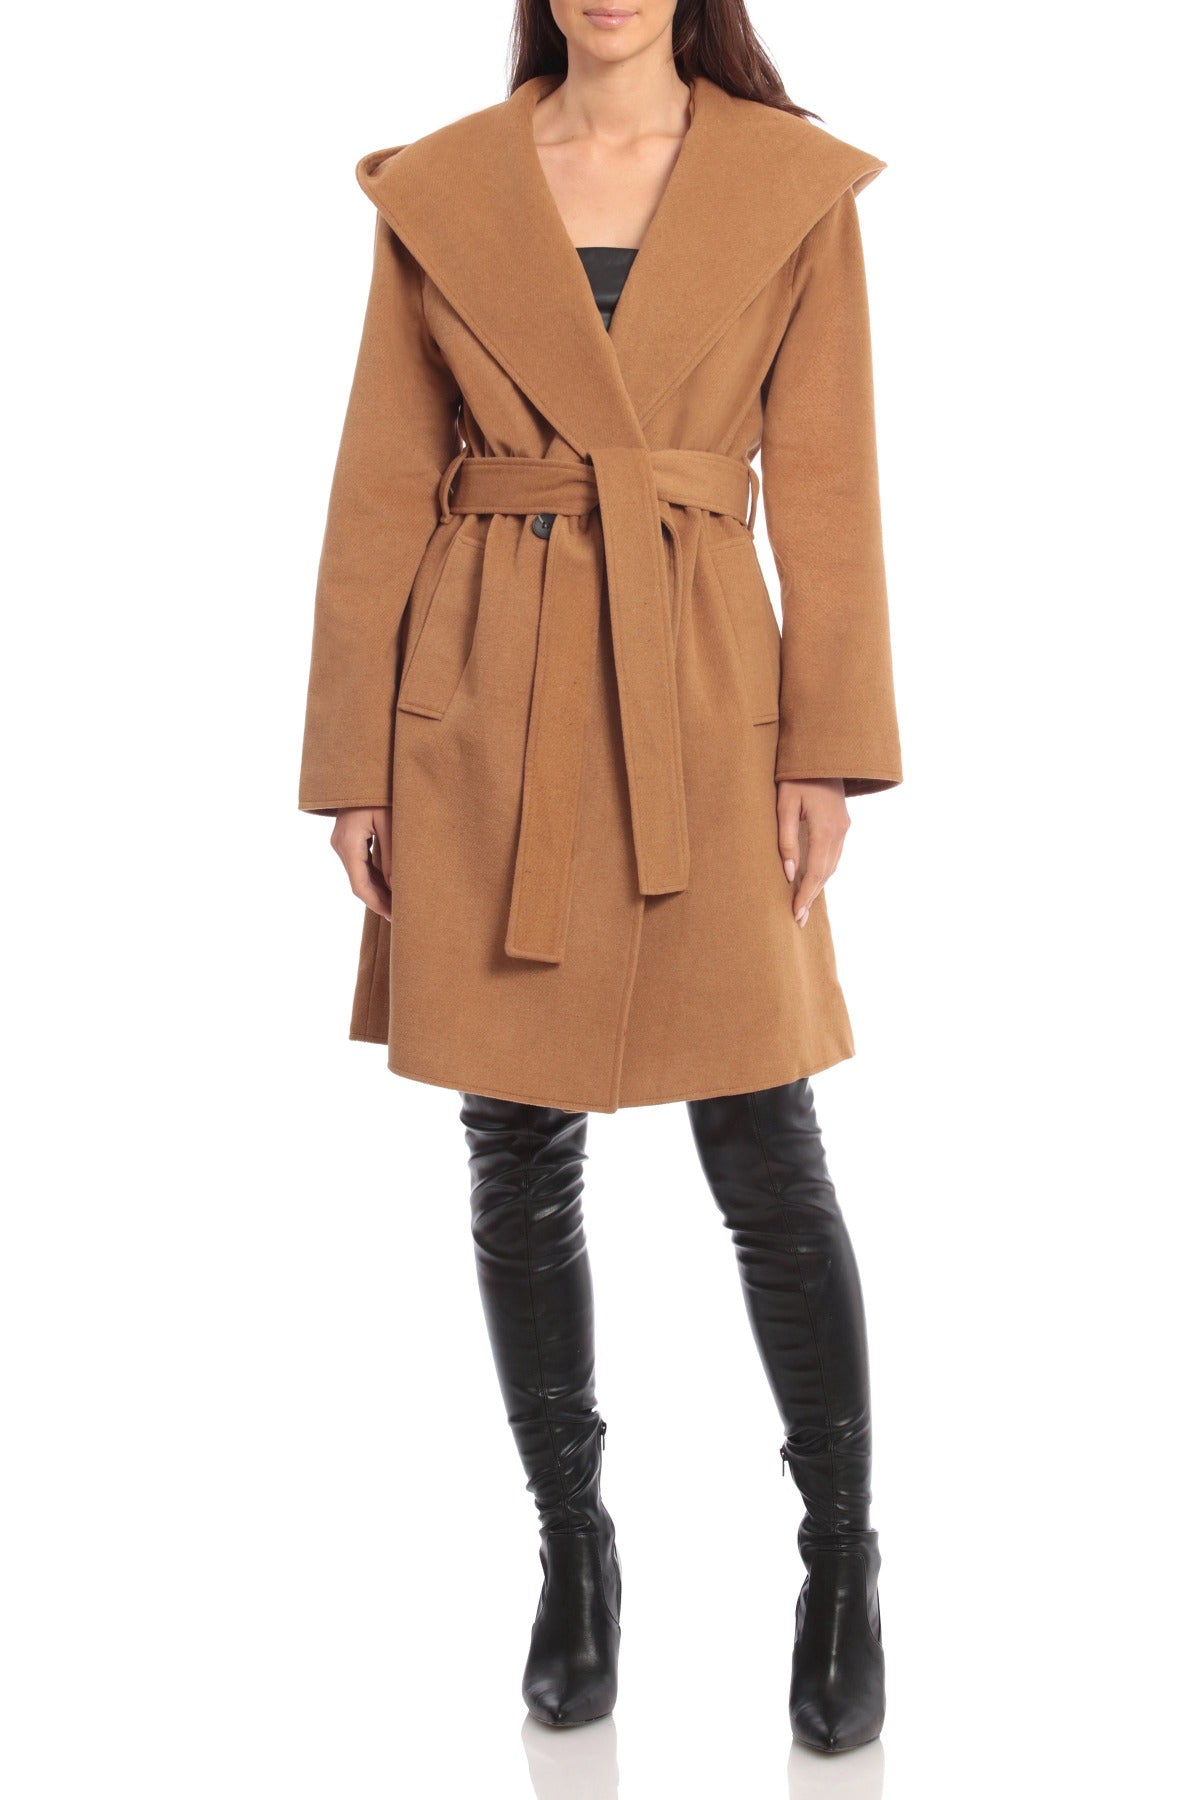 Twill Wool Blend Robe Coat Camel Beige Brown - Women's Figure Flattering Day to Night Coats Jackets